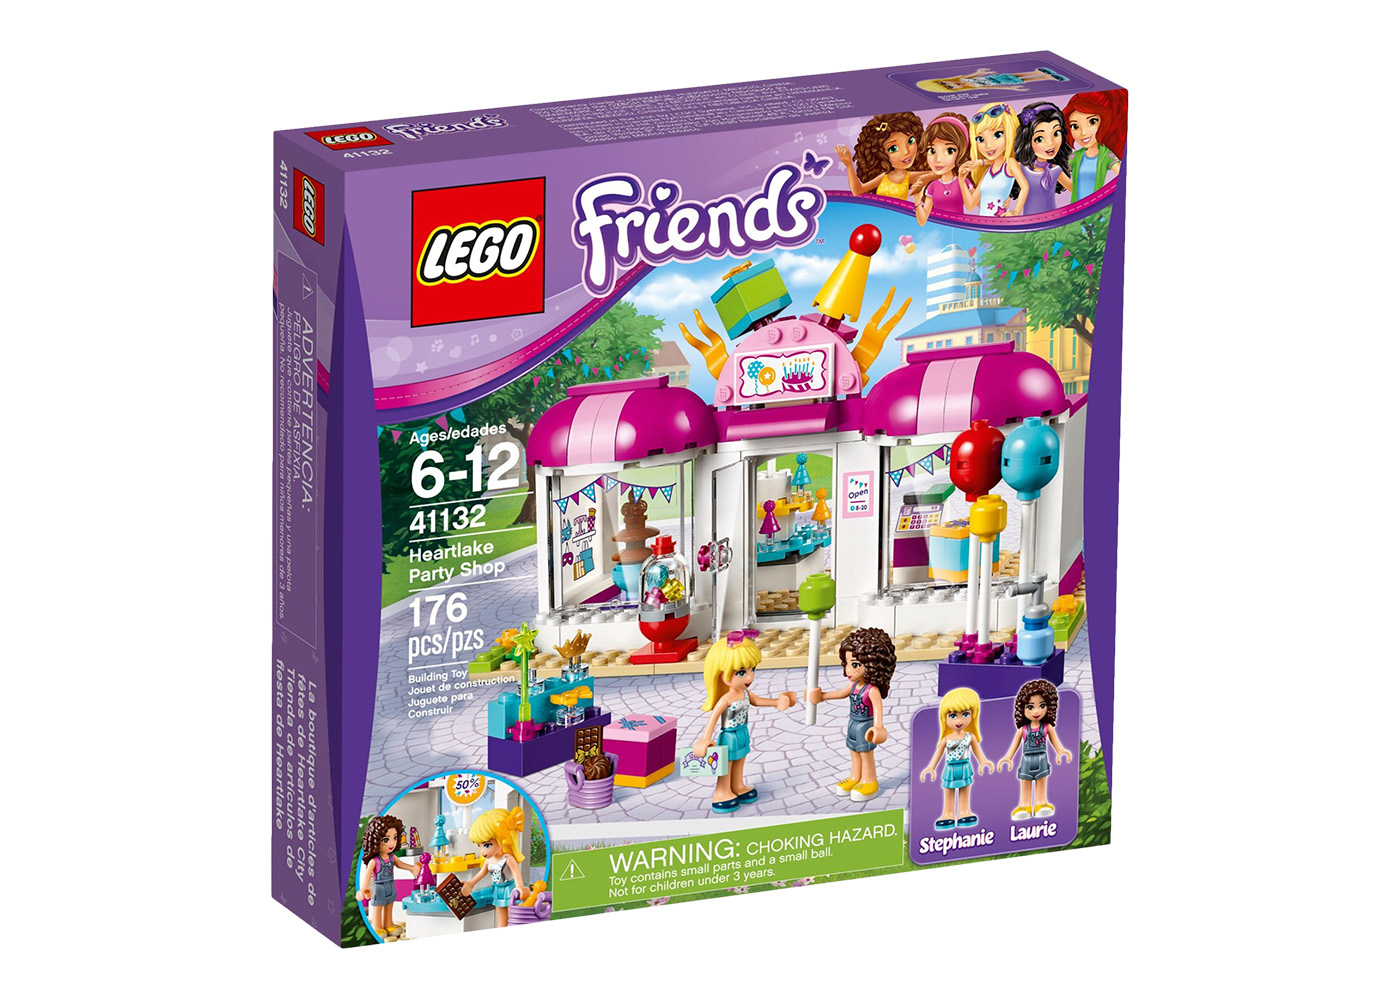 LEGO Friends Heartlake Party Shop Set 41132 - US